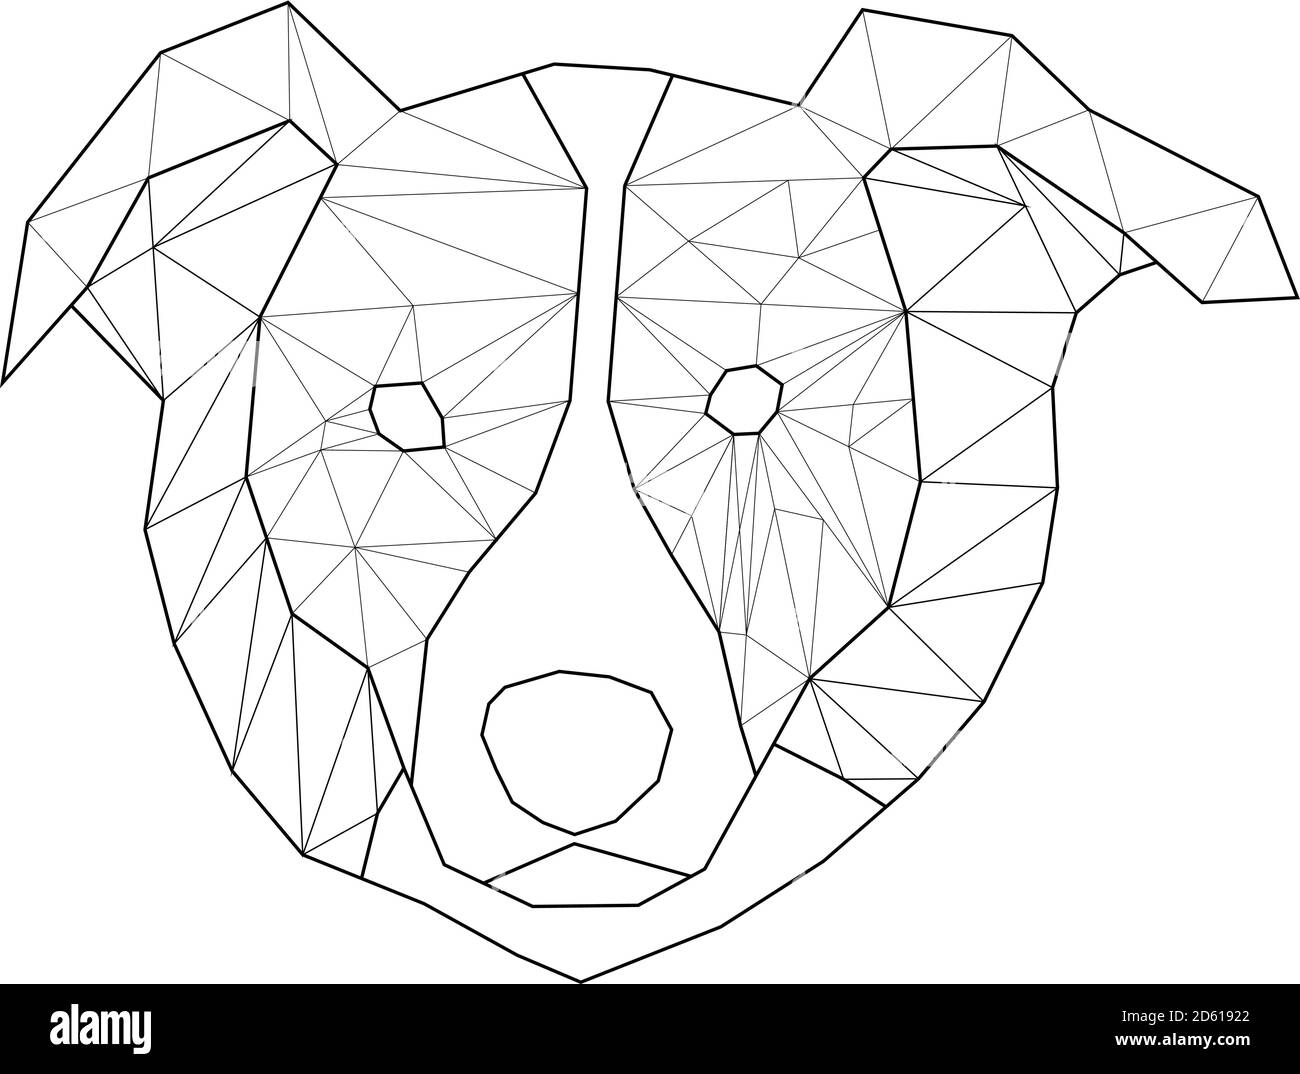 Vektor. Abstrakter polygonaler Kopfhund. Lineare Geometrie Stock Vektor